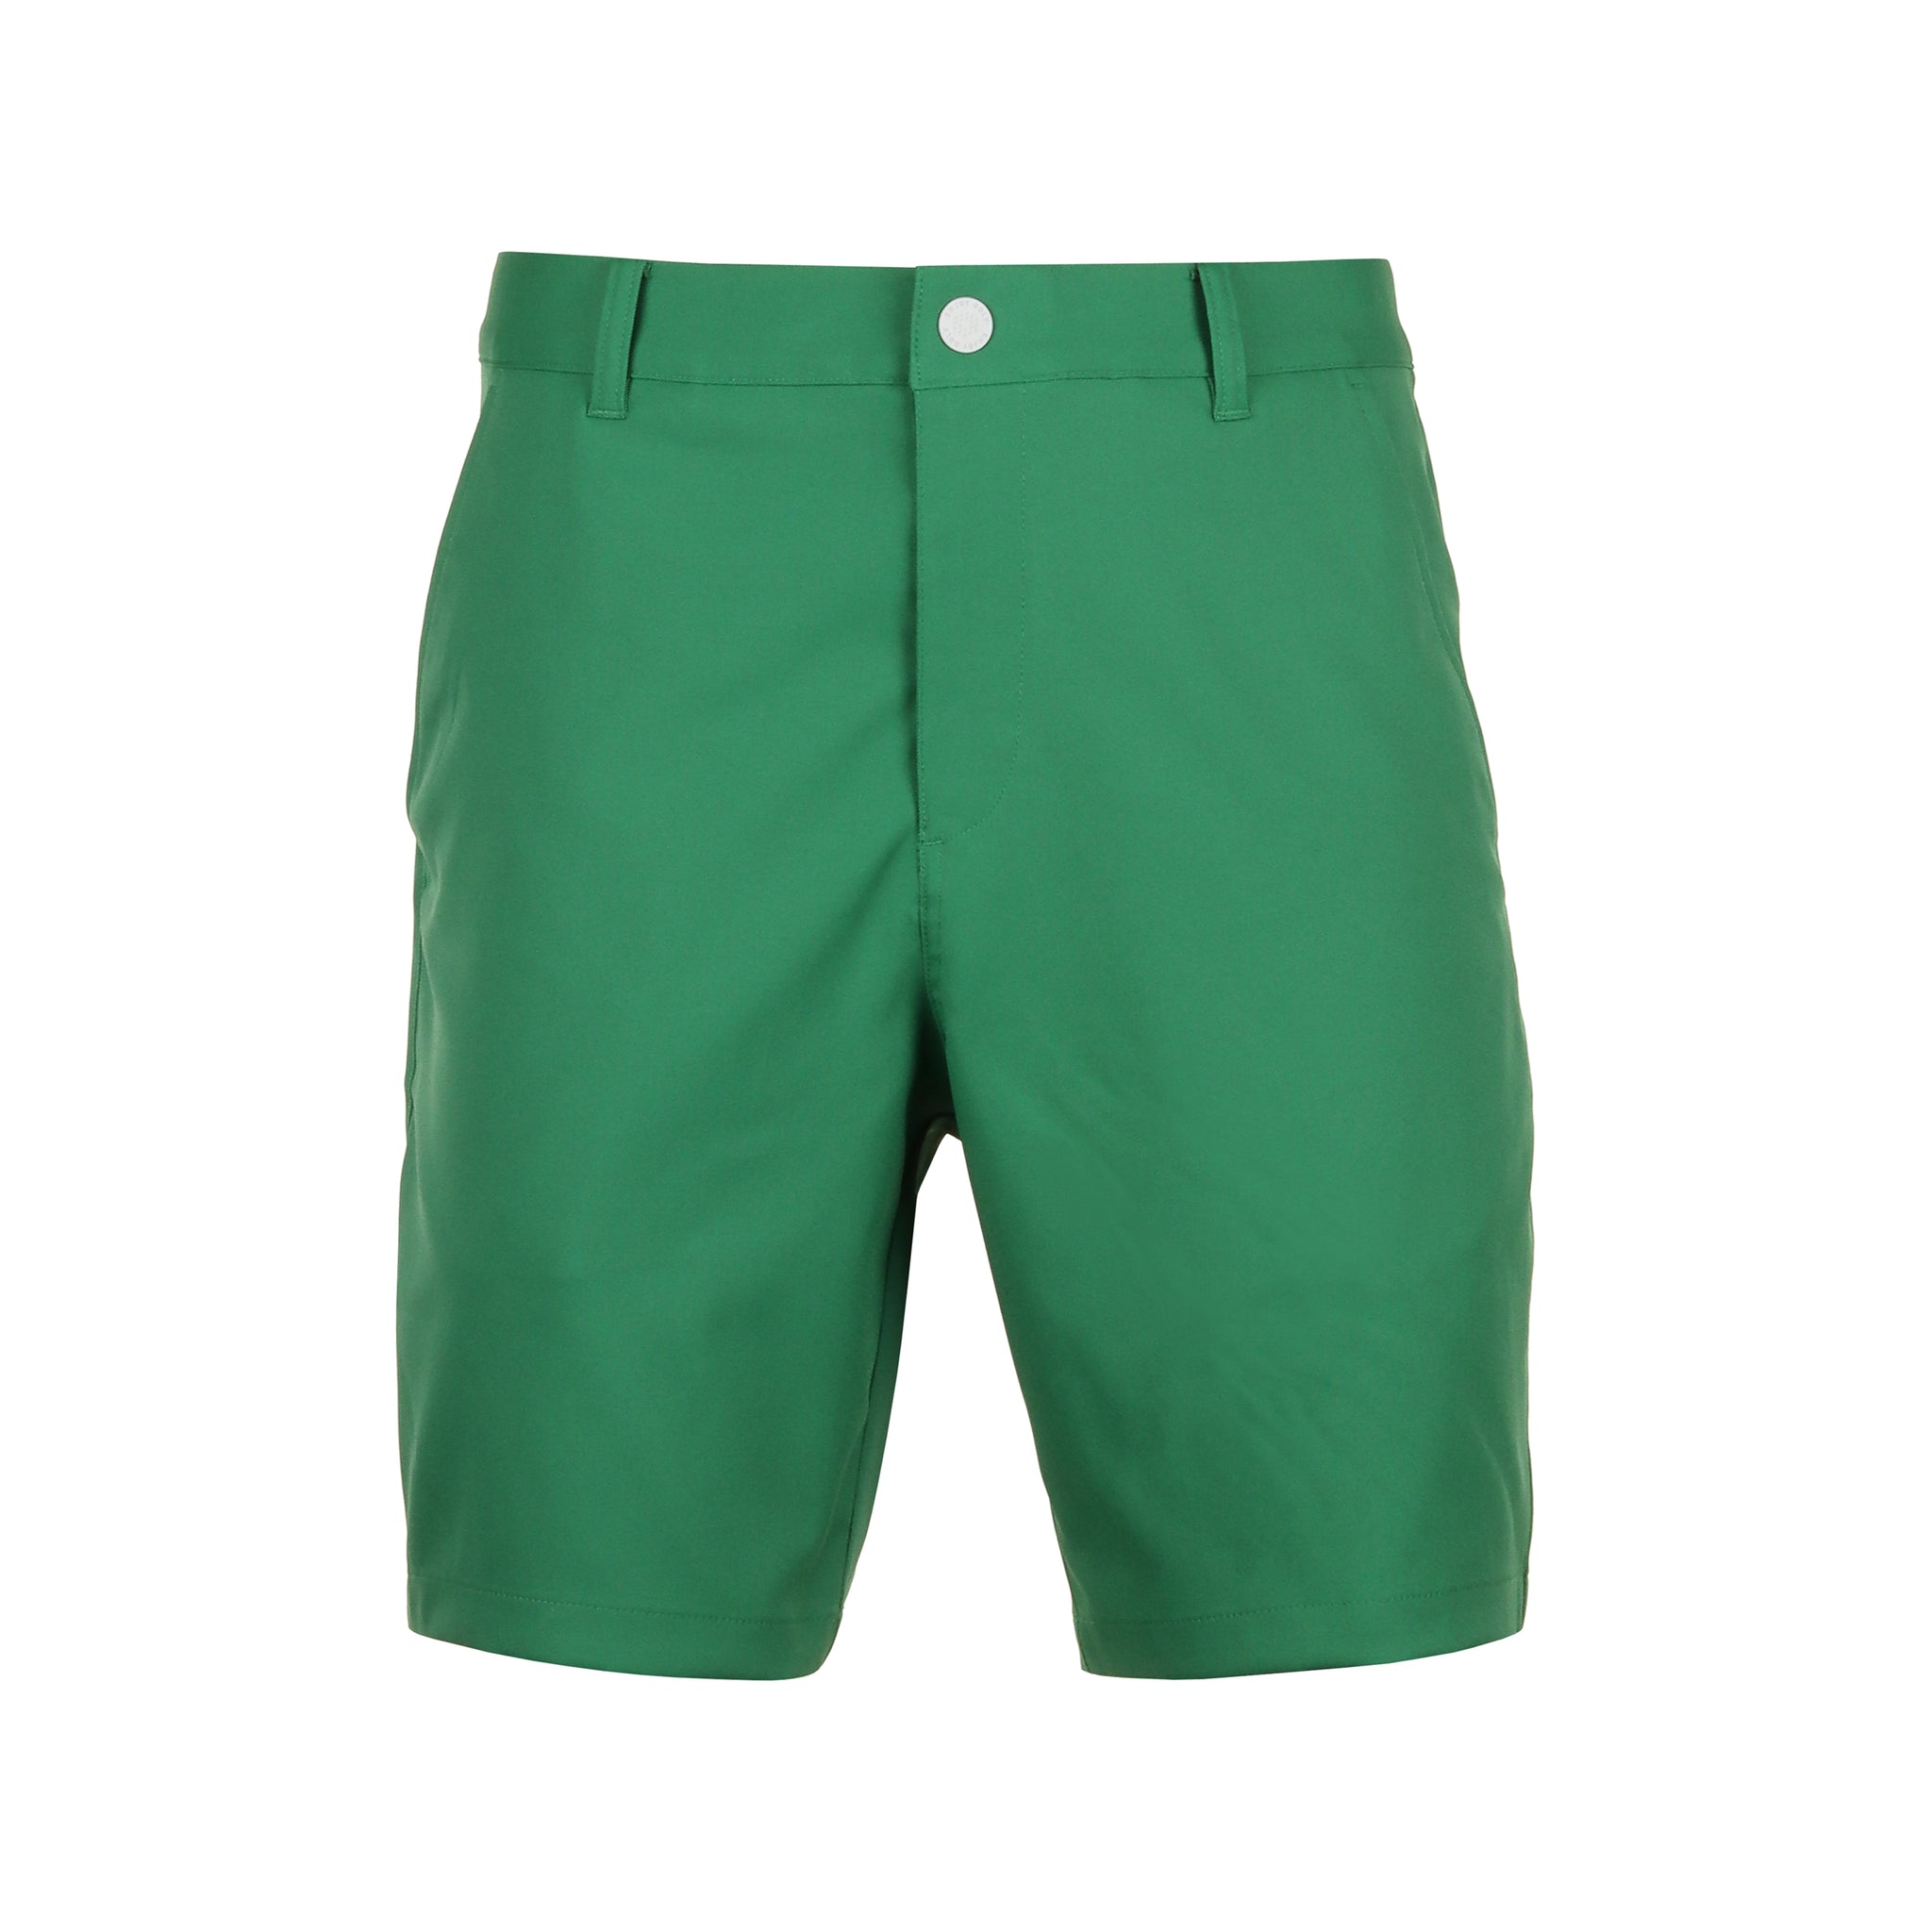 Puma Golf Dealer 8" Shorts